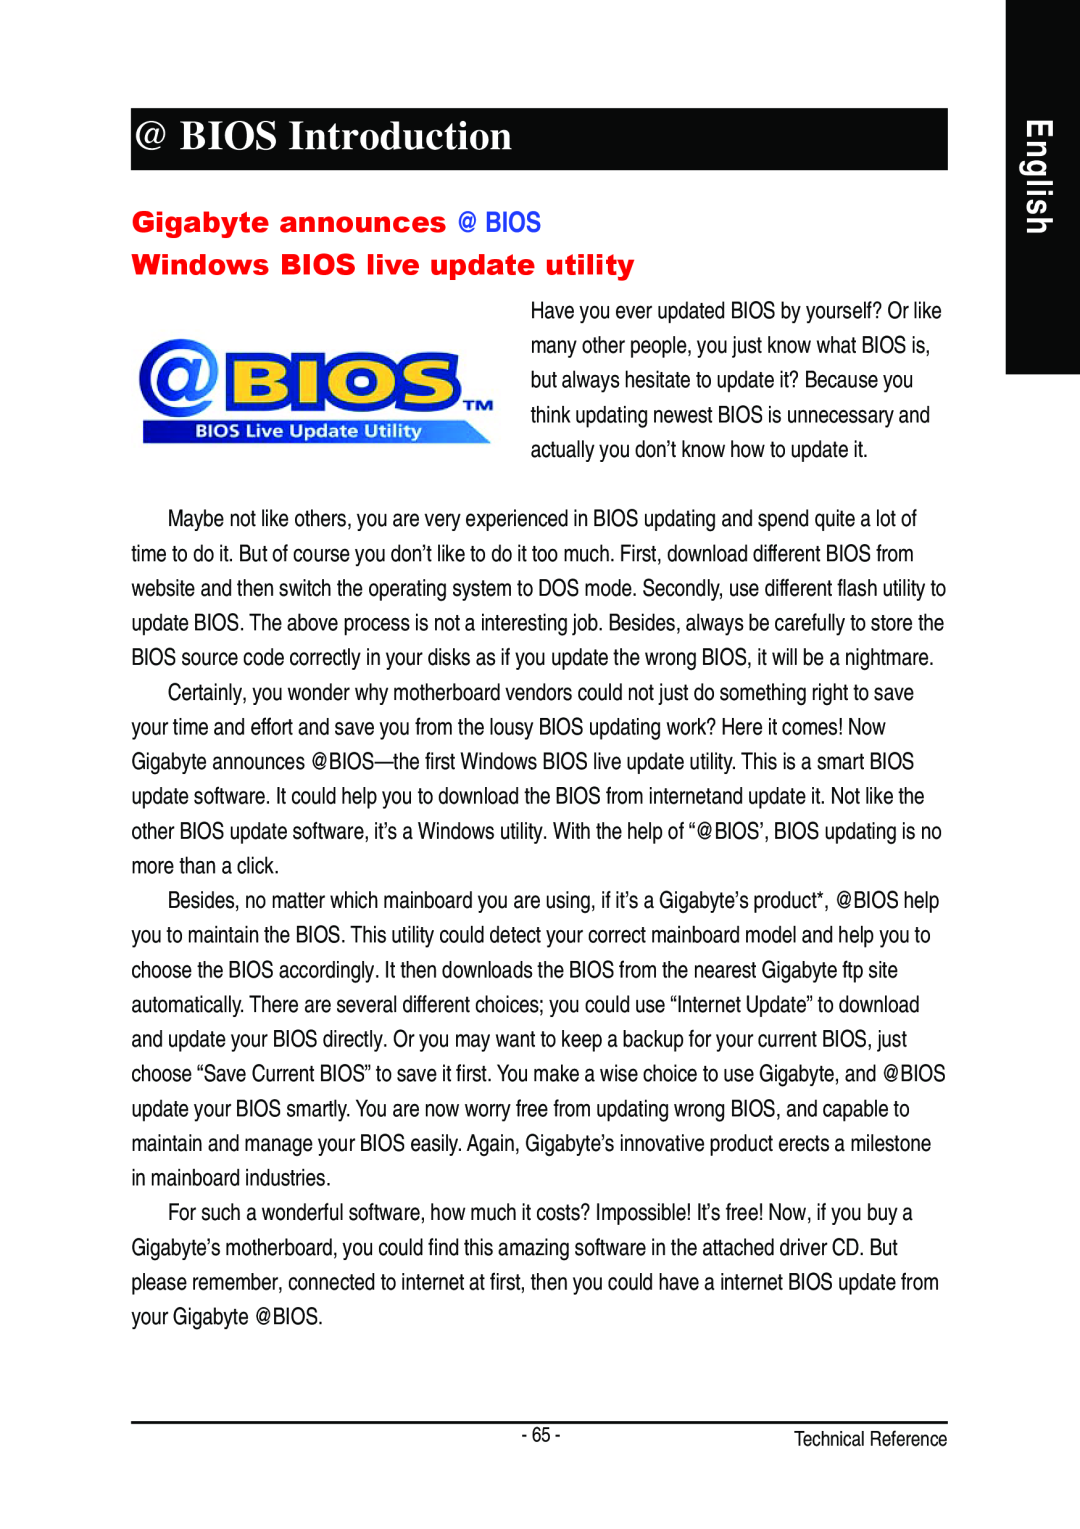 Gigabyte GA-8GEM667 manual @ BIOS Introduction, English, Gigabyte announces @ BIOS Windows BIOS live update utility 